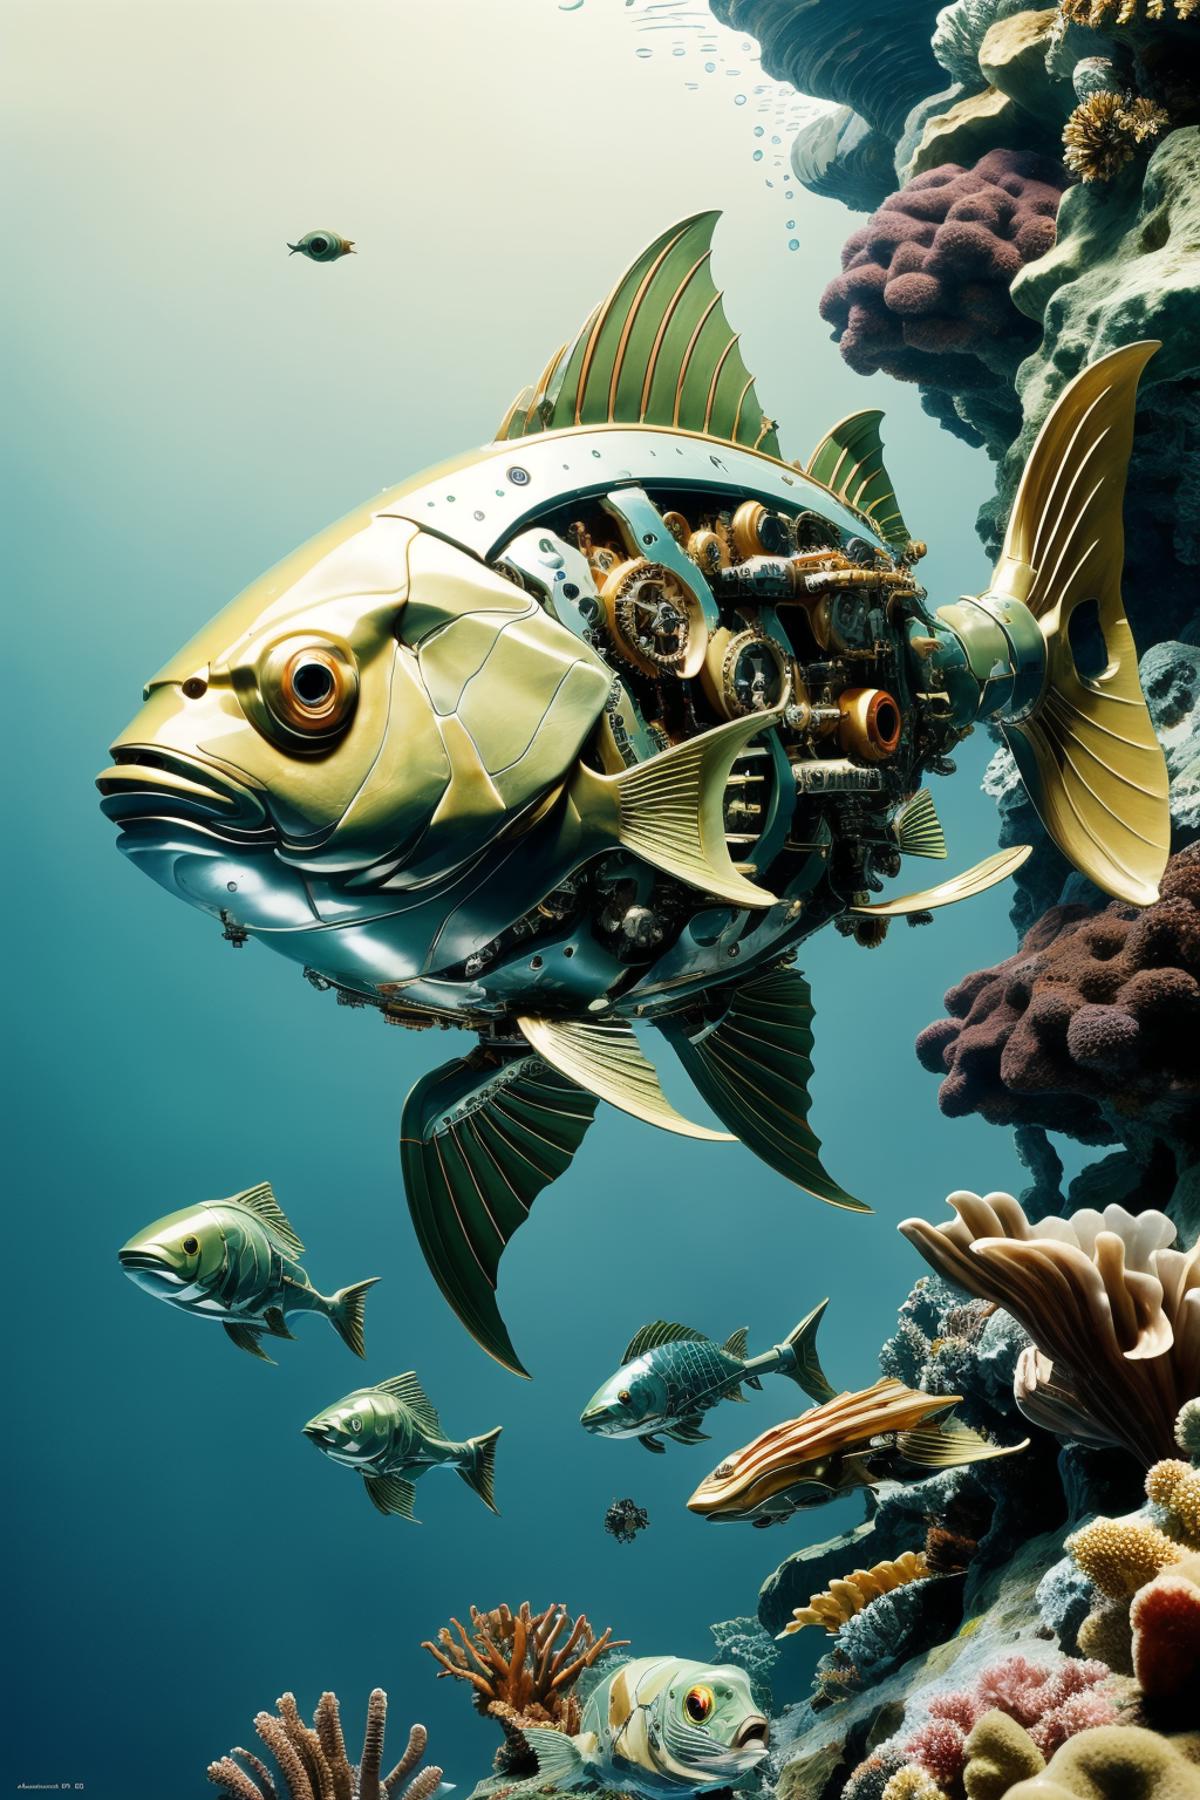 Mechanical fish image by InfiniteLight